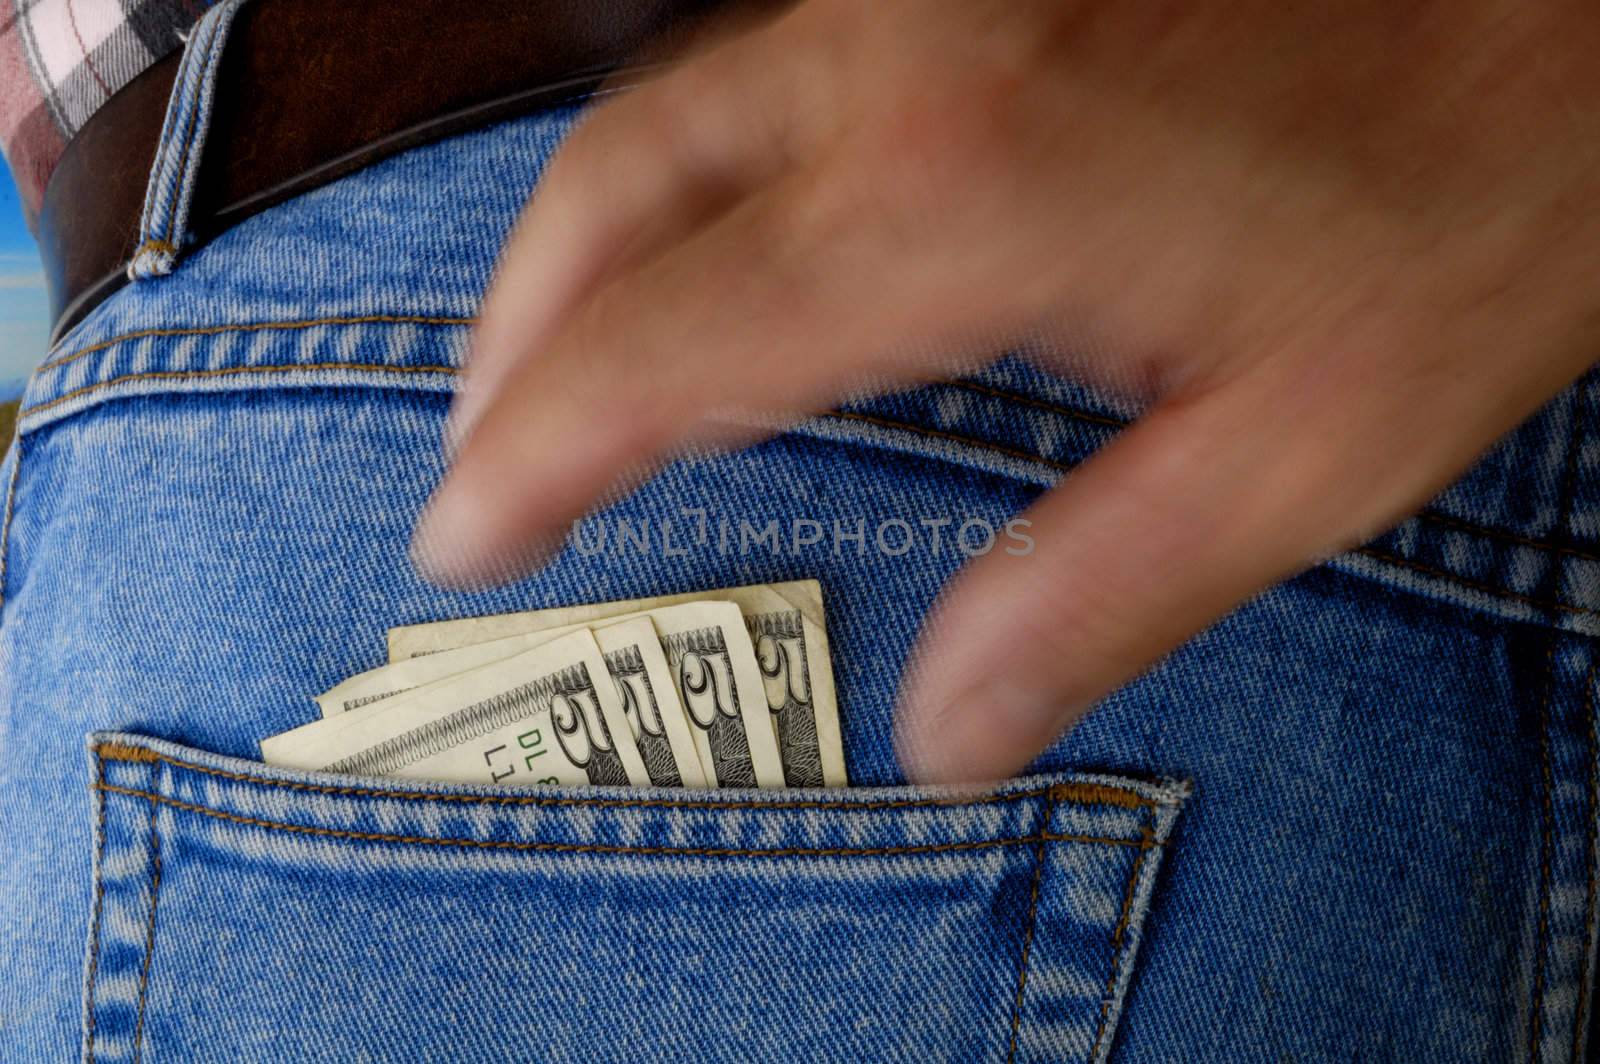 Pickpocket in action - Dollar bills. by Bateleur